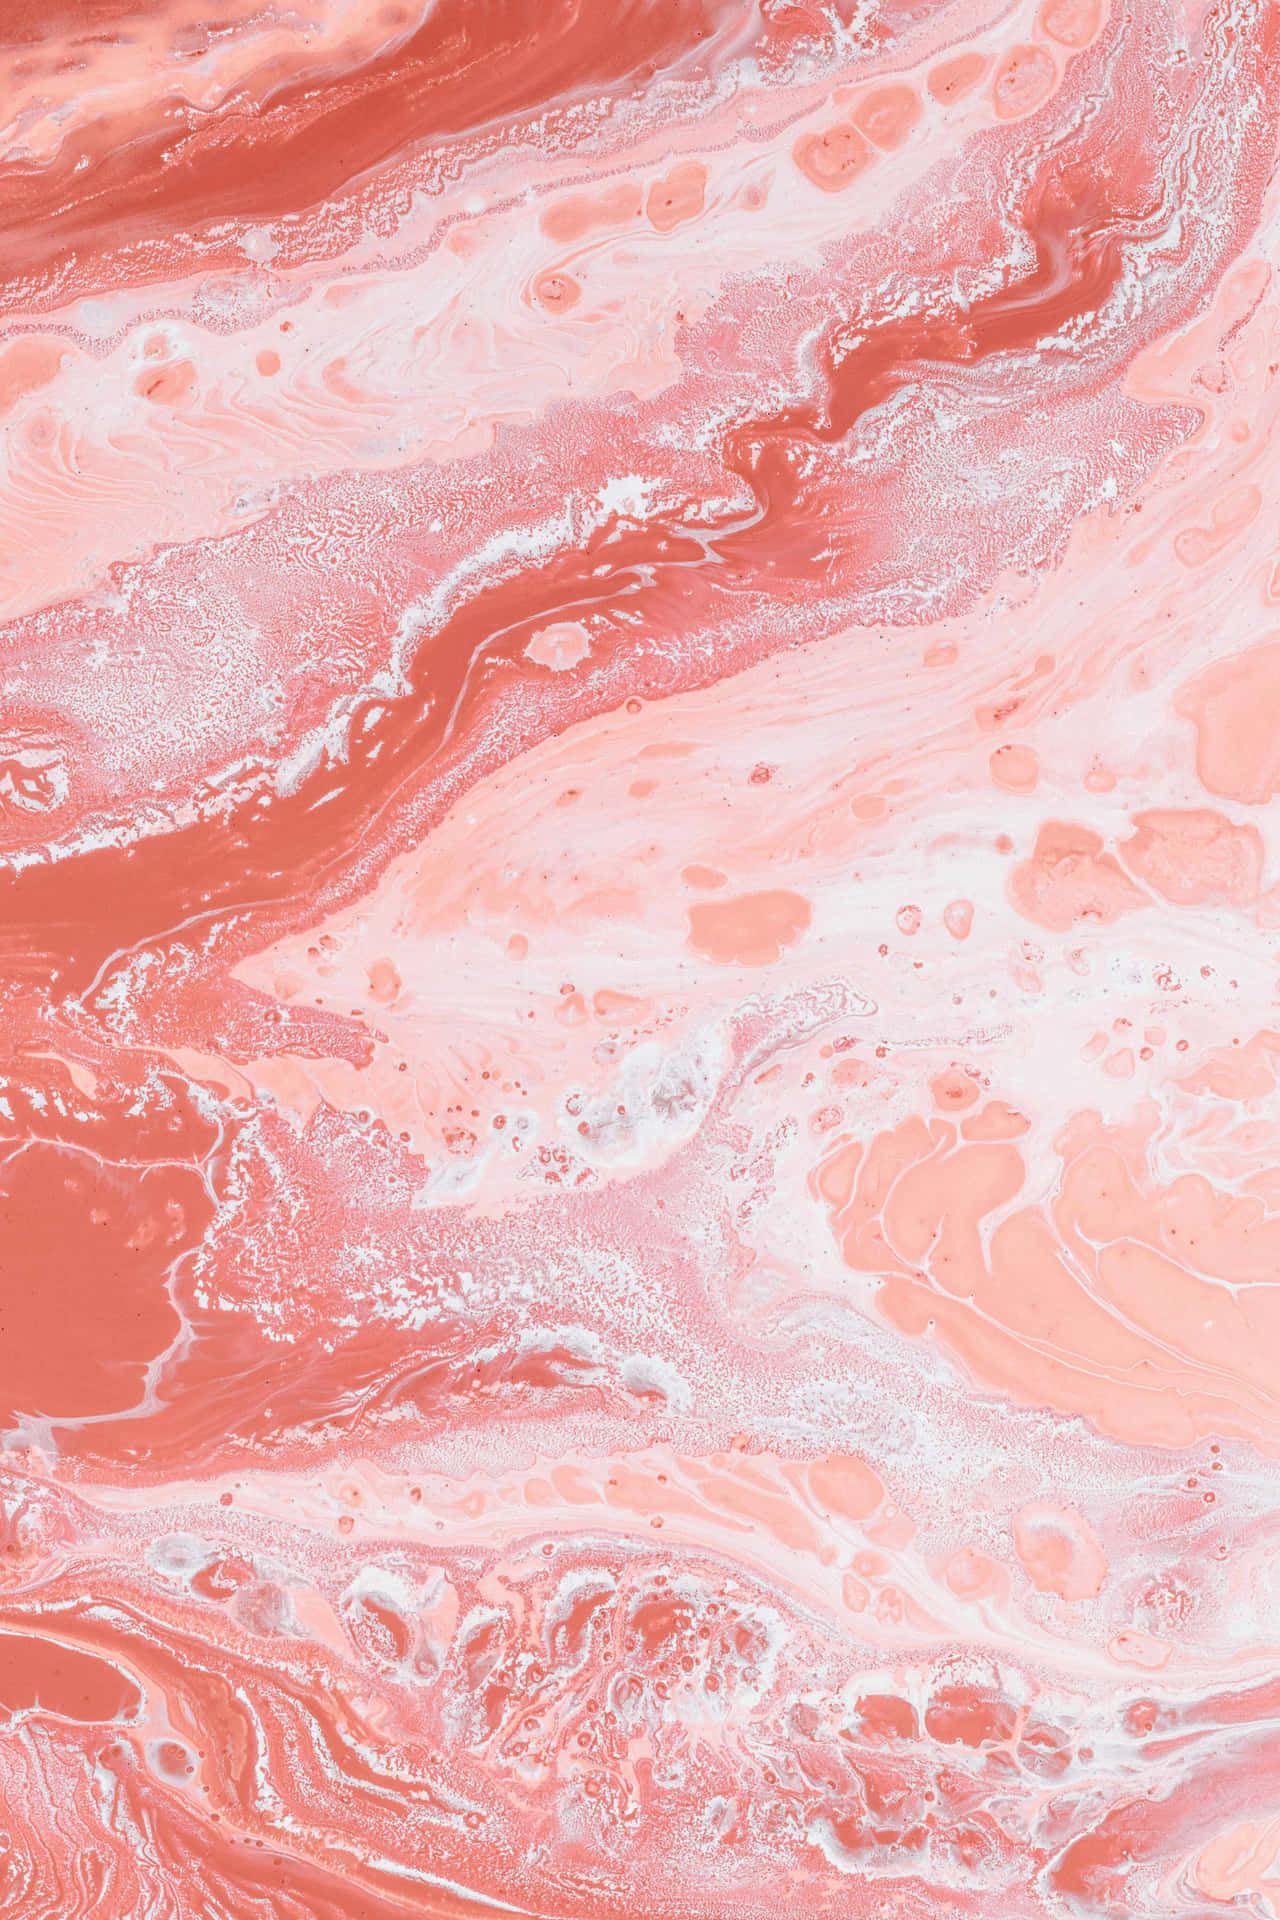 Pink Orange Marble Aesthetic Texture Wallpaper